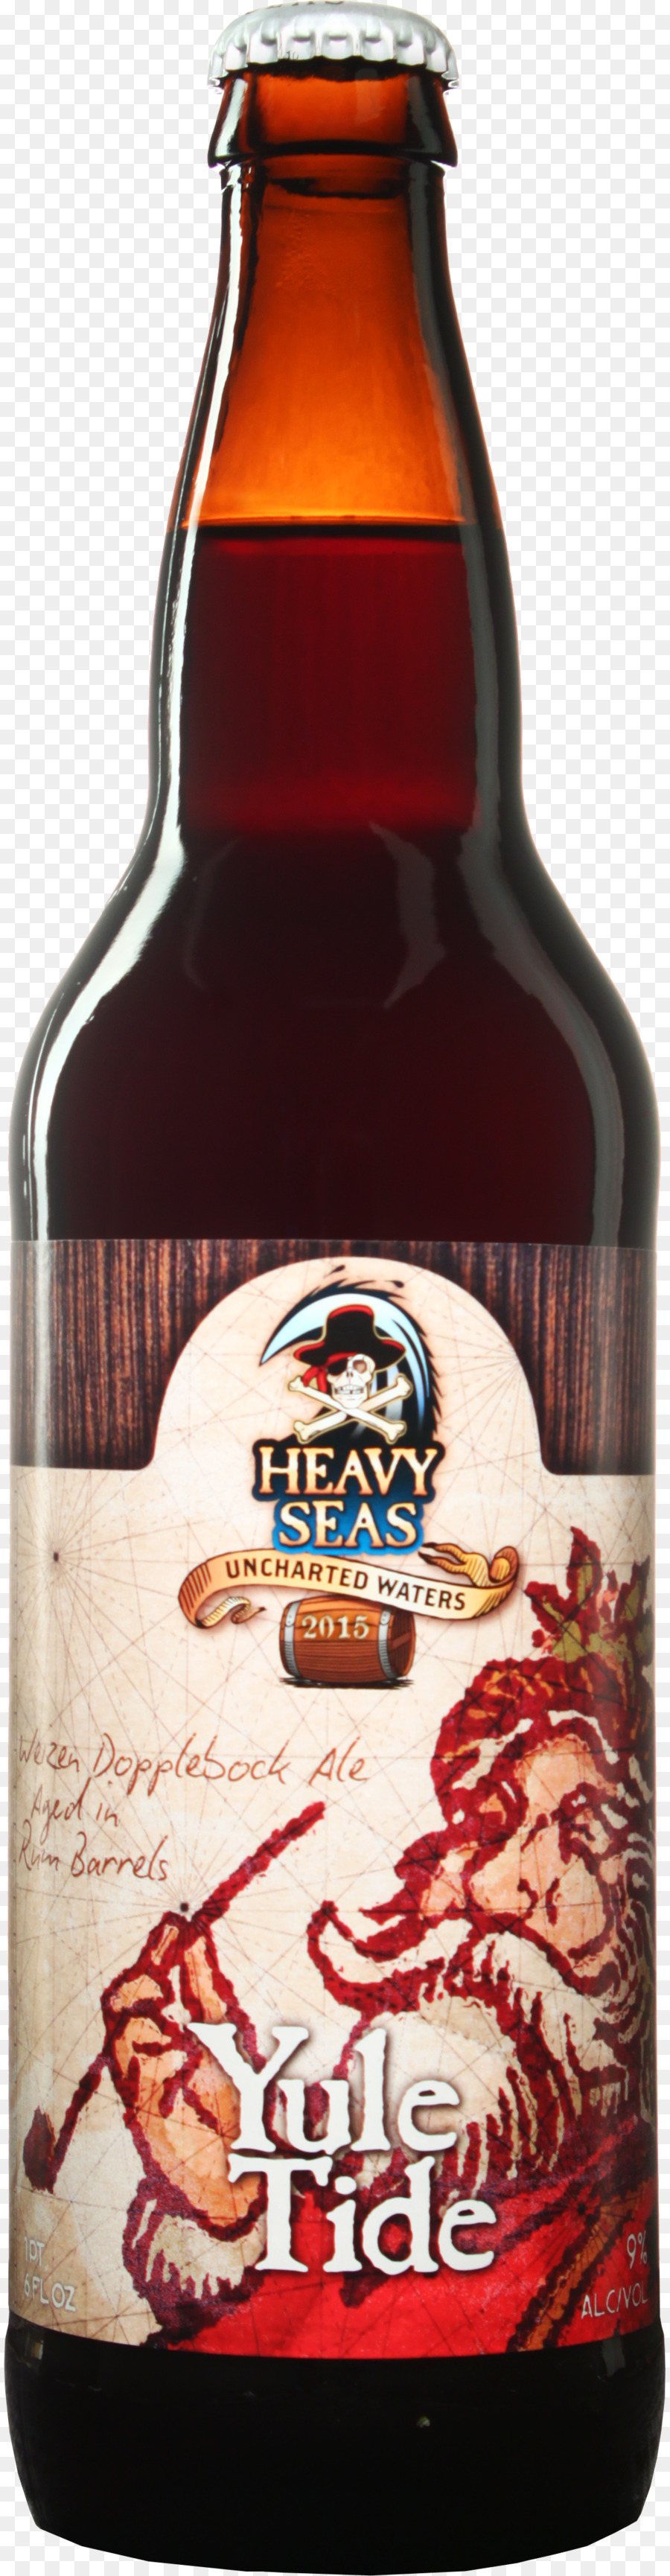 Ale Heavy Seas Beer Stout Bier Flasche - Bier